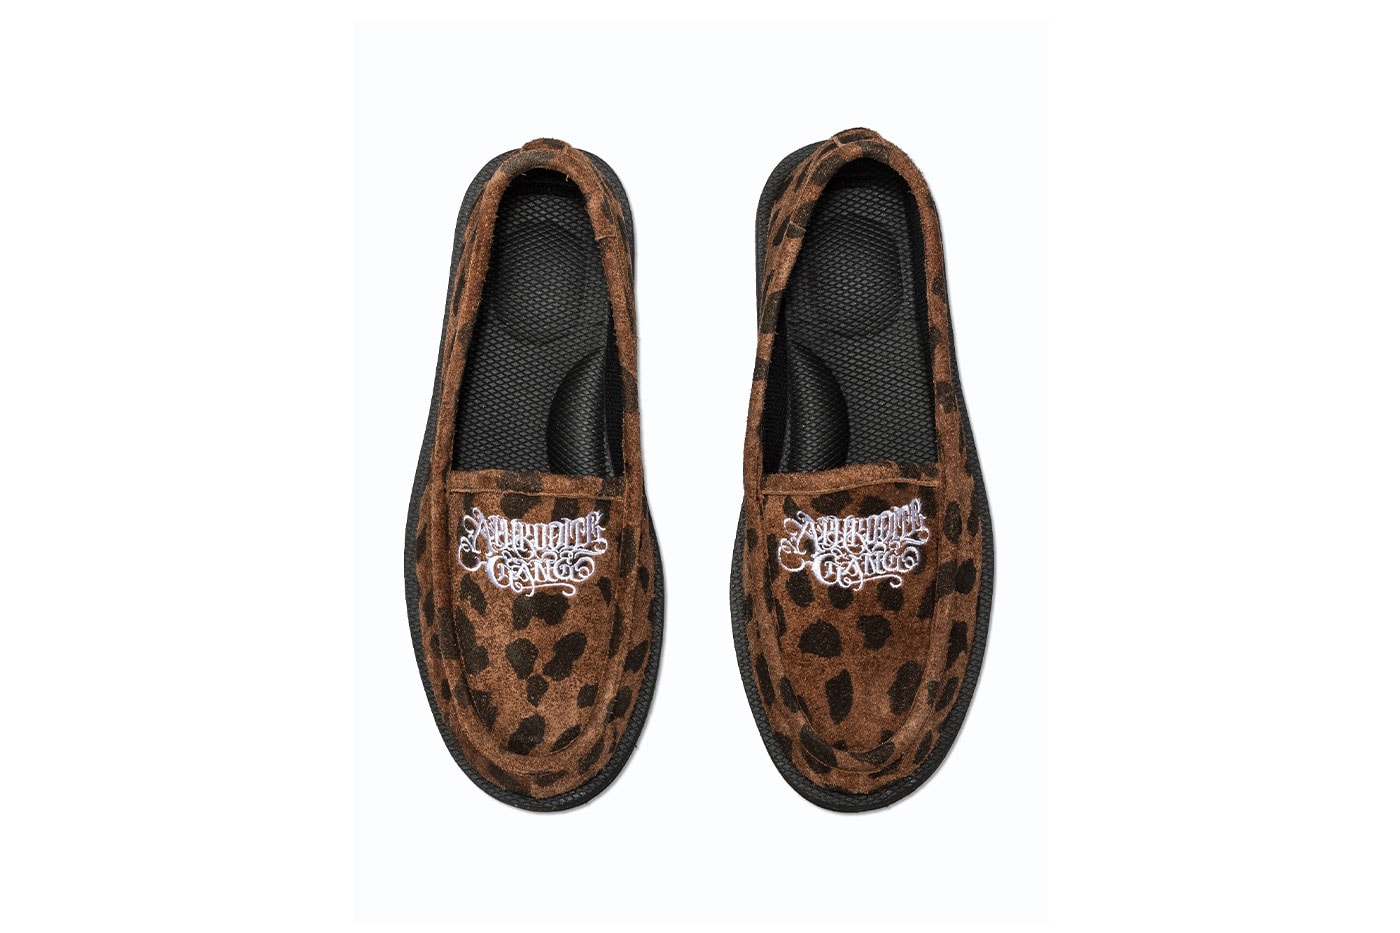 Wacko Maria Budspool Suicoke Deebo shoes Leopard Print Brown HBX Price Buy Info Release